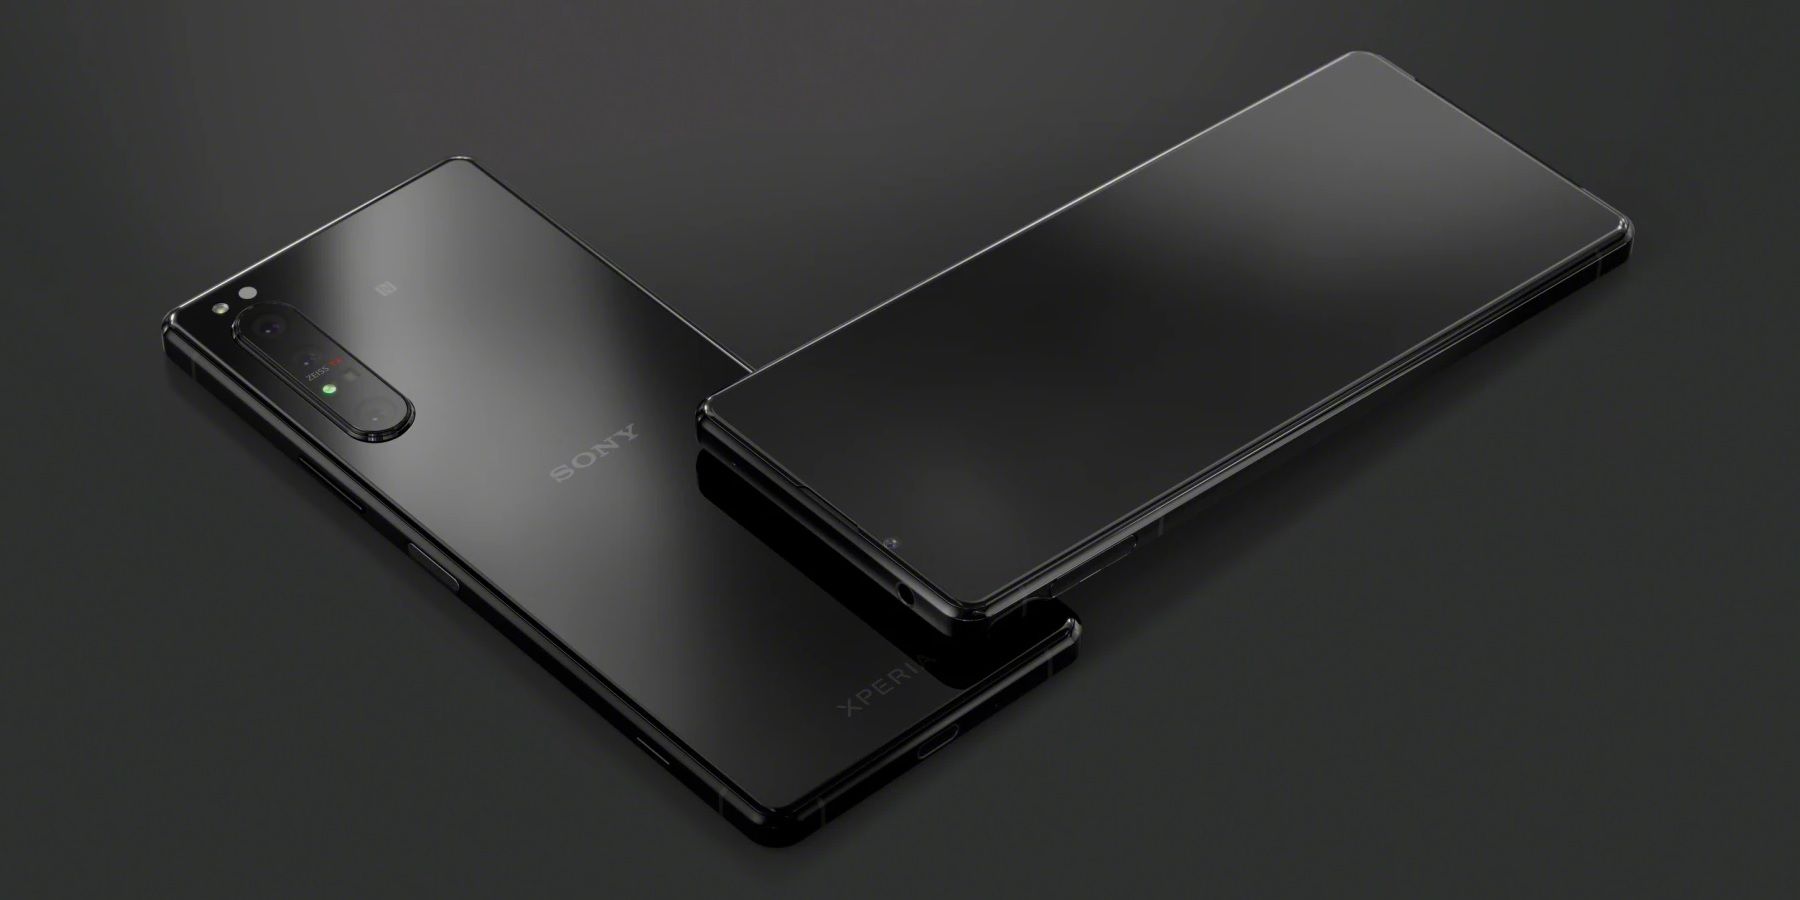 New Sony Xperia phone 2020